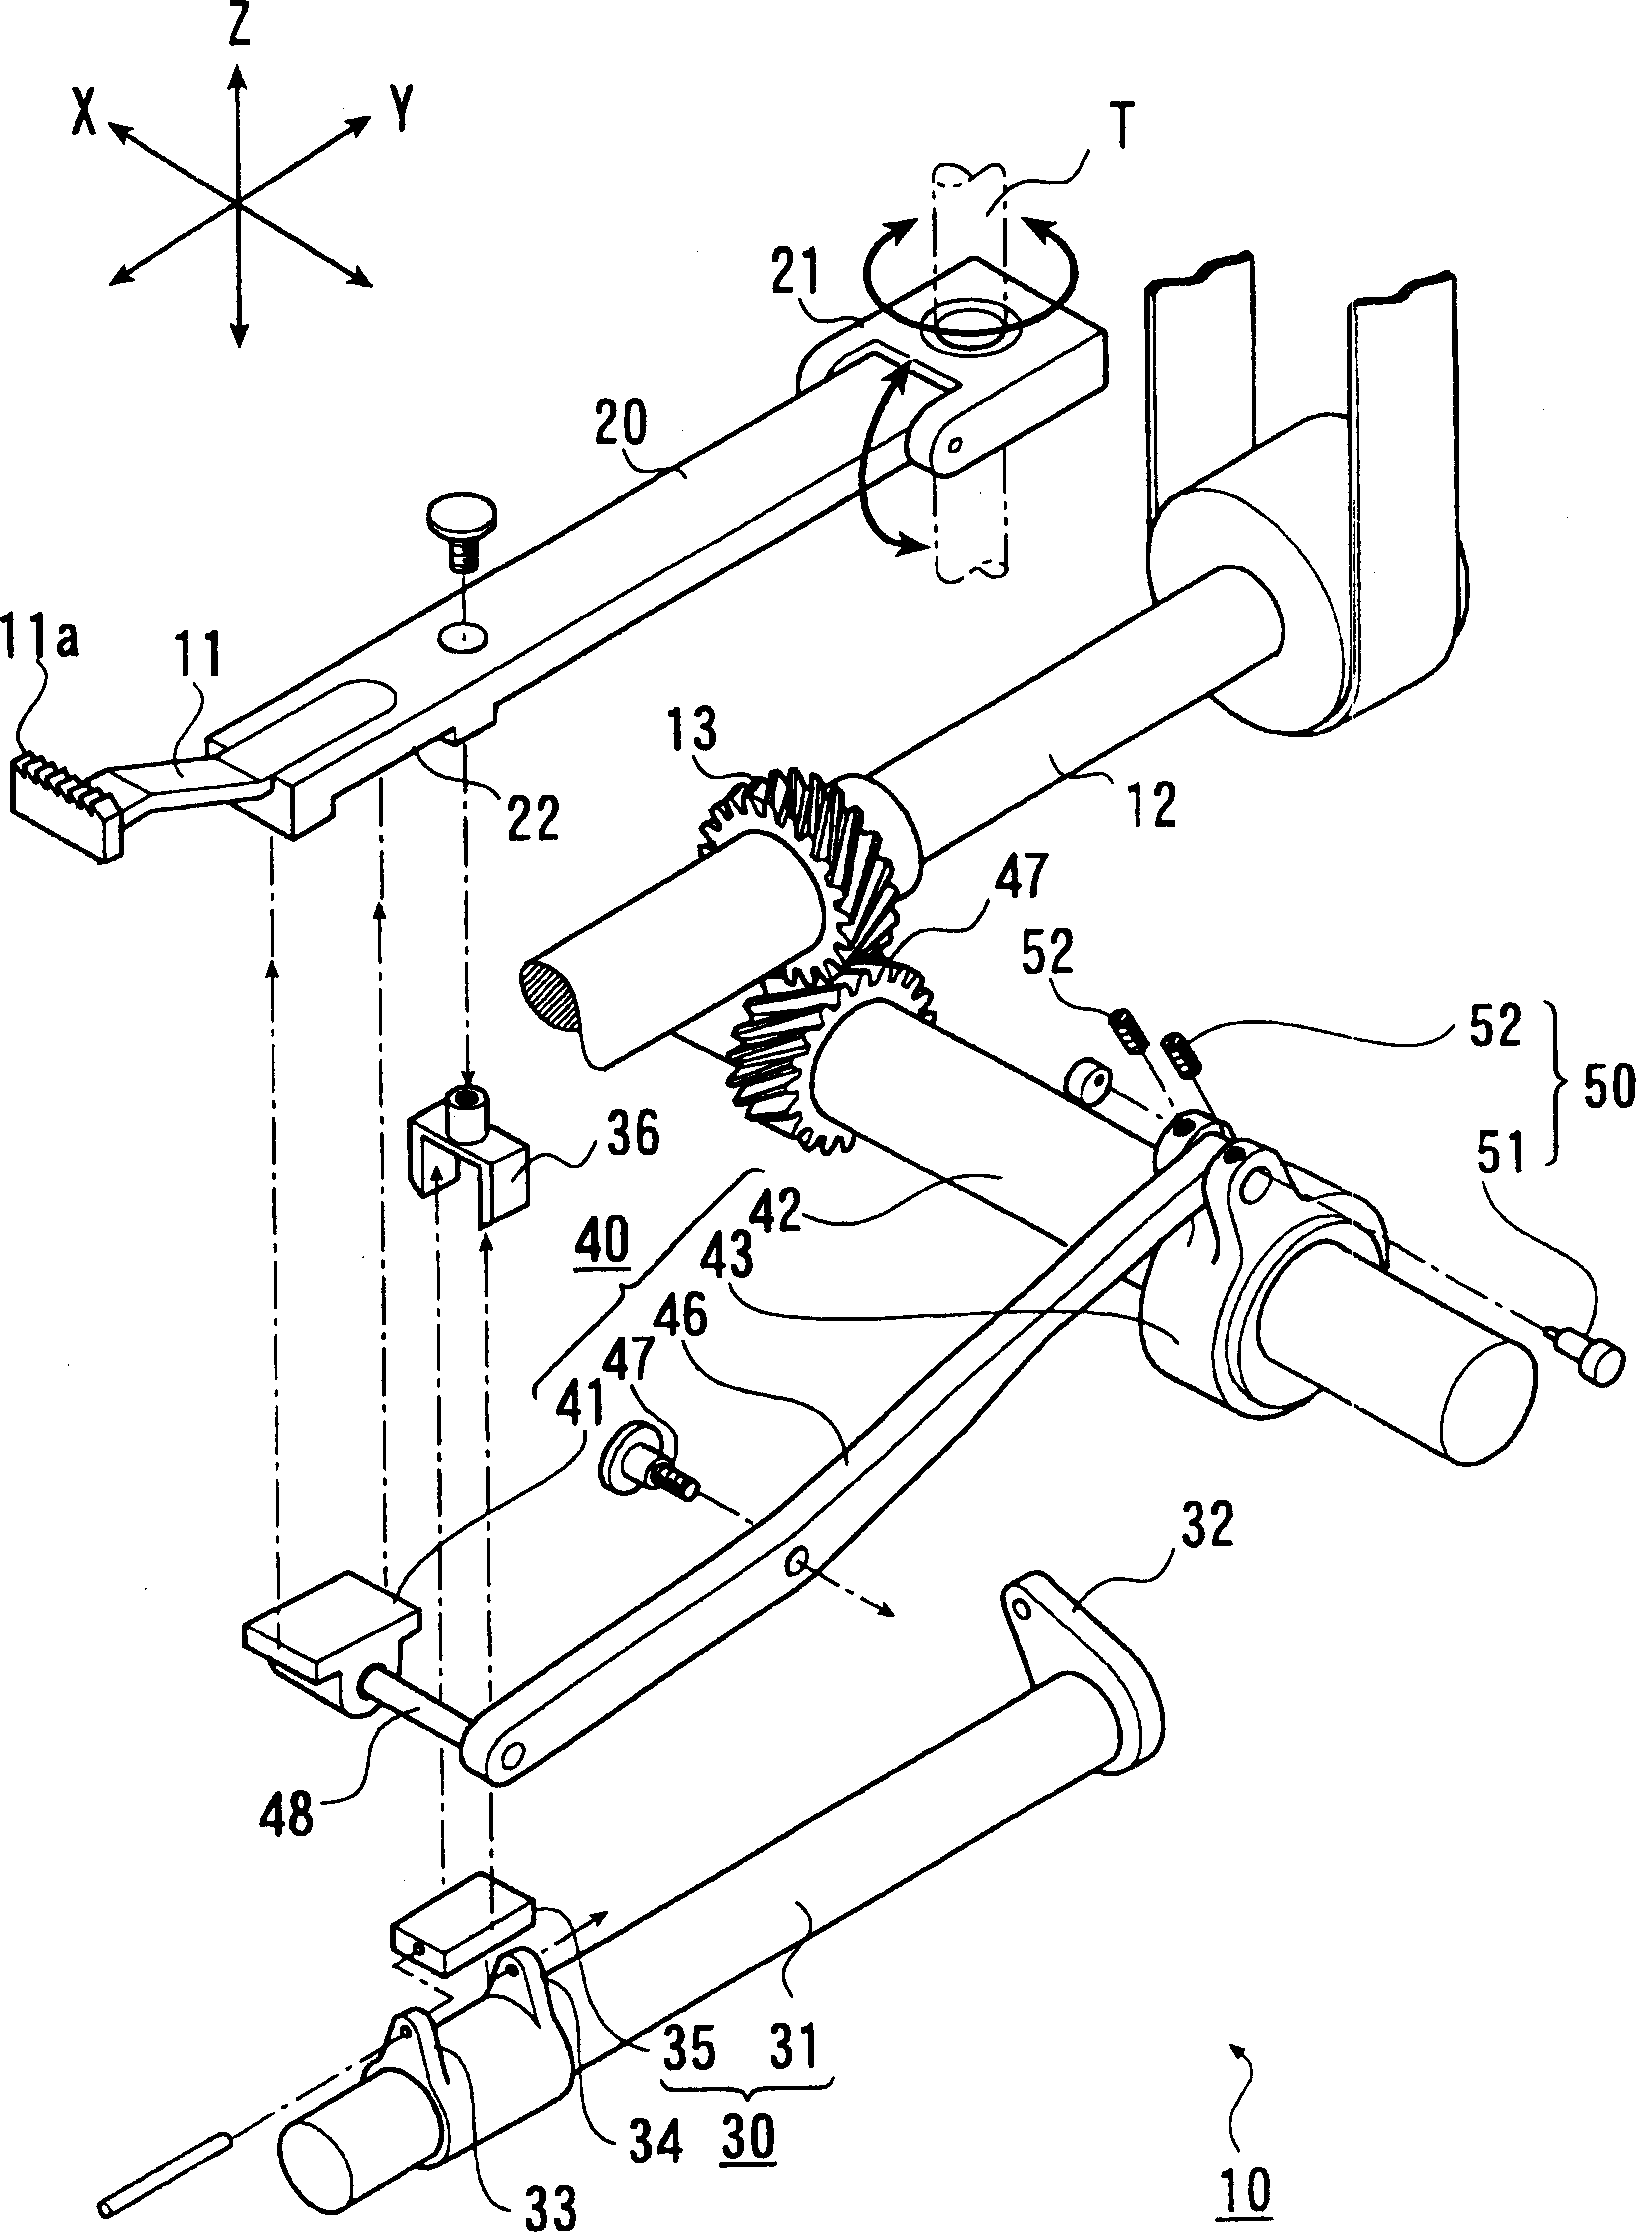 Cloth feeding mechanism of sewing machine